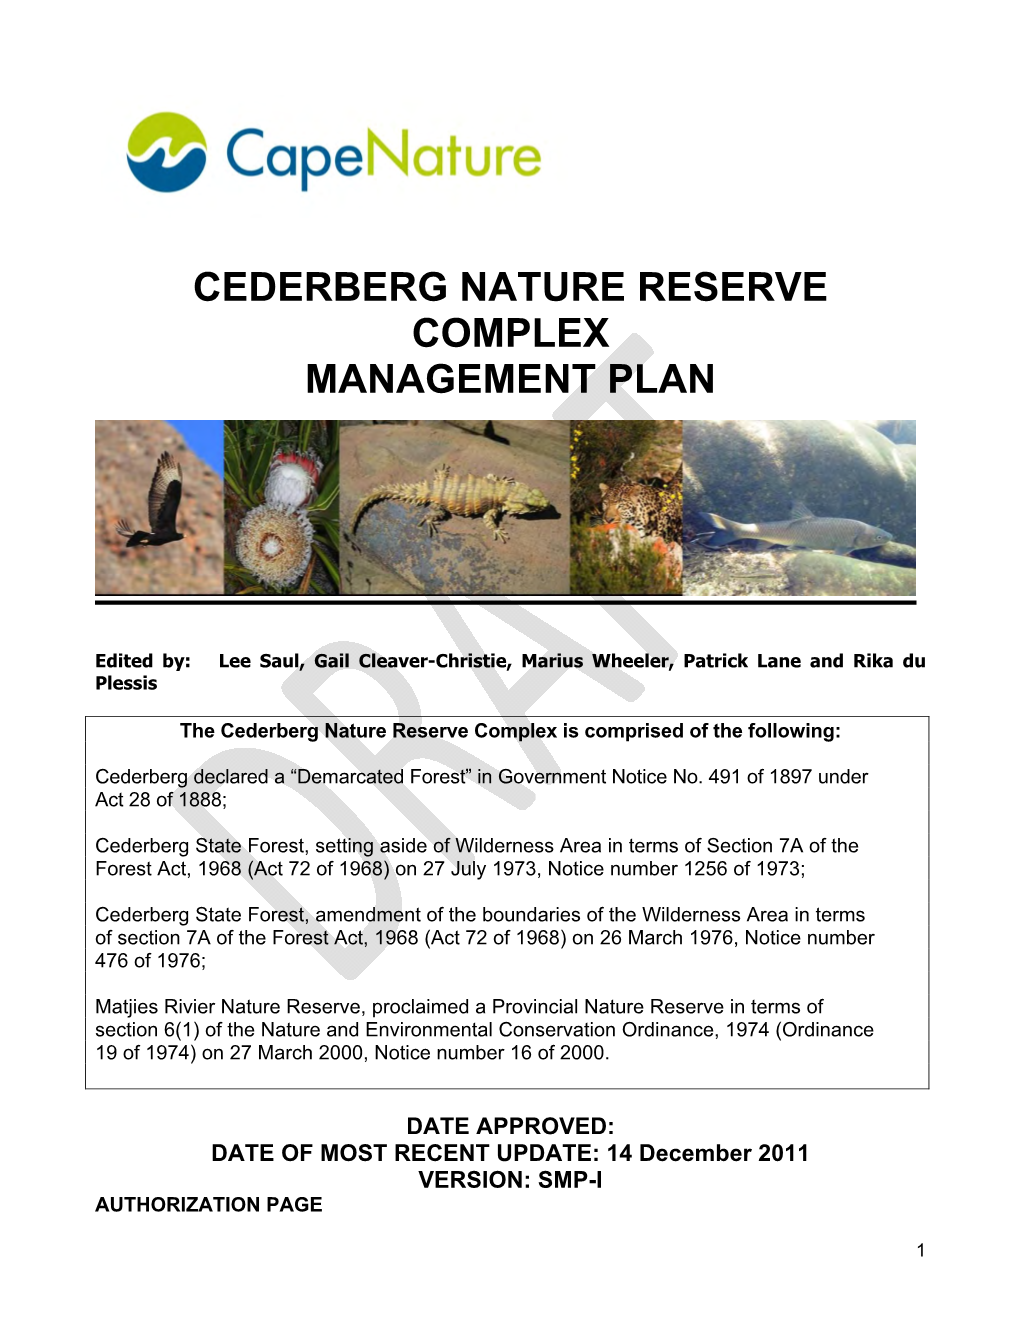 Cederberg Nature Reserve Complex Management Plan